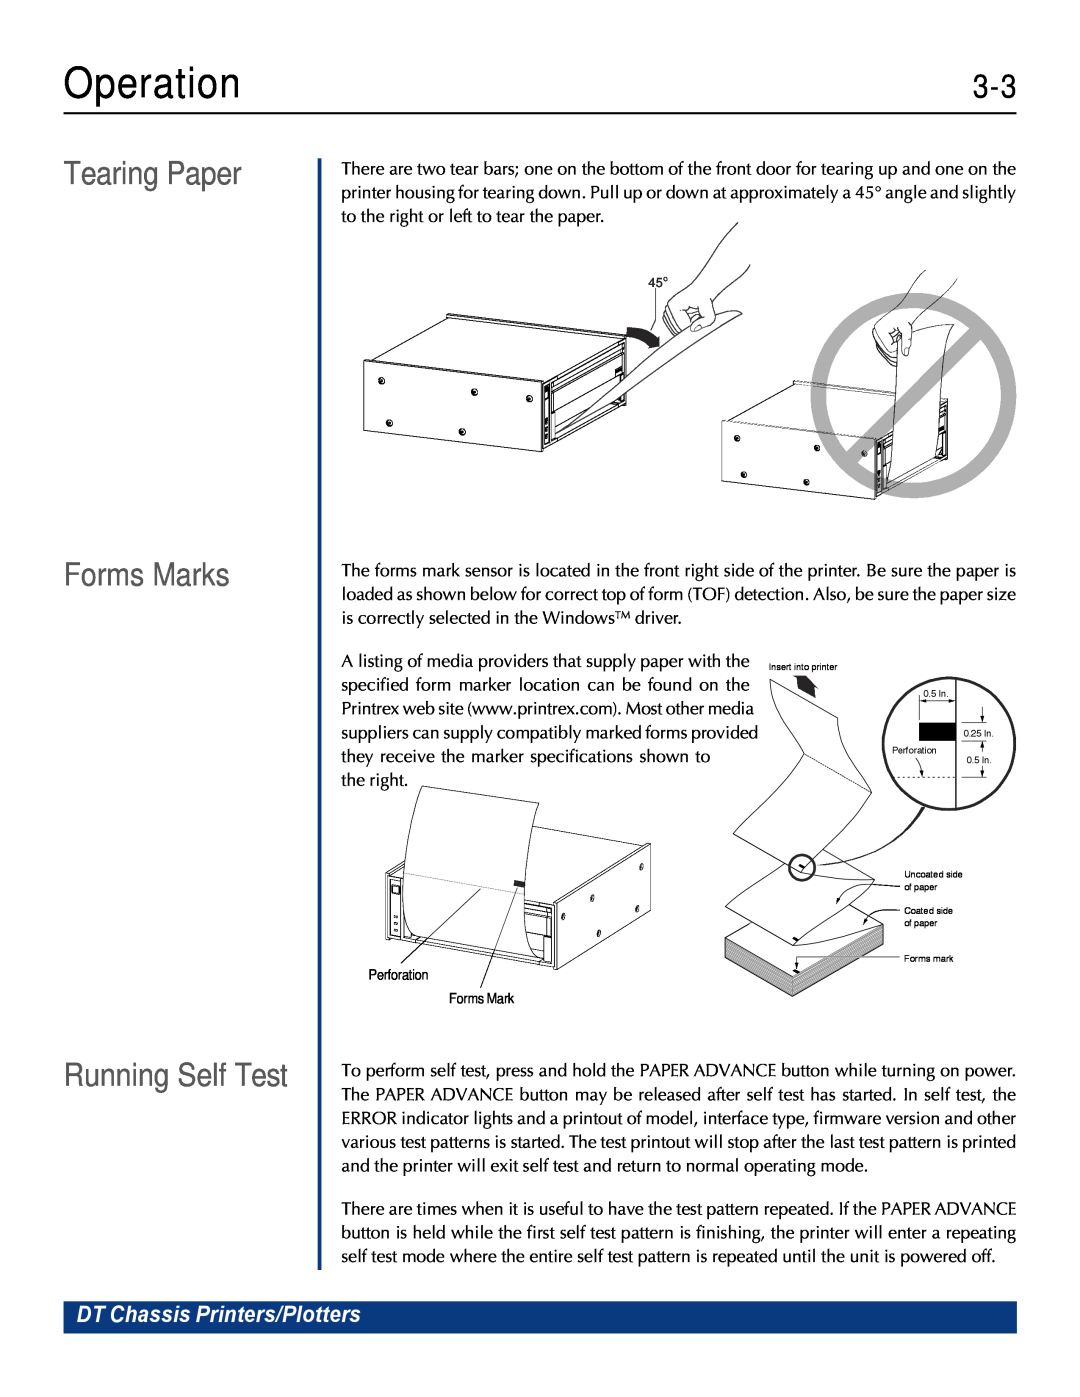 Printek 810, 820G, 840DL/G, 820DL/G Tearing Paper Forms Marks, Running Self Test, Operation, DT Chassis Printers/Plotters 